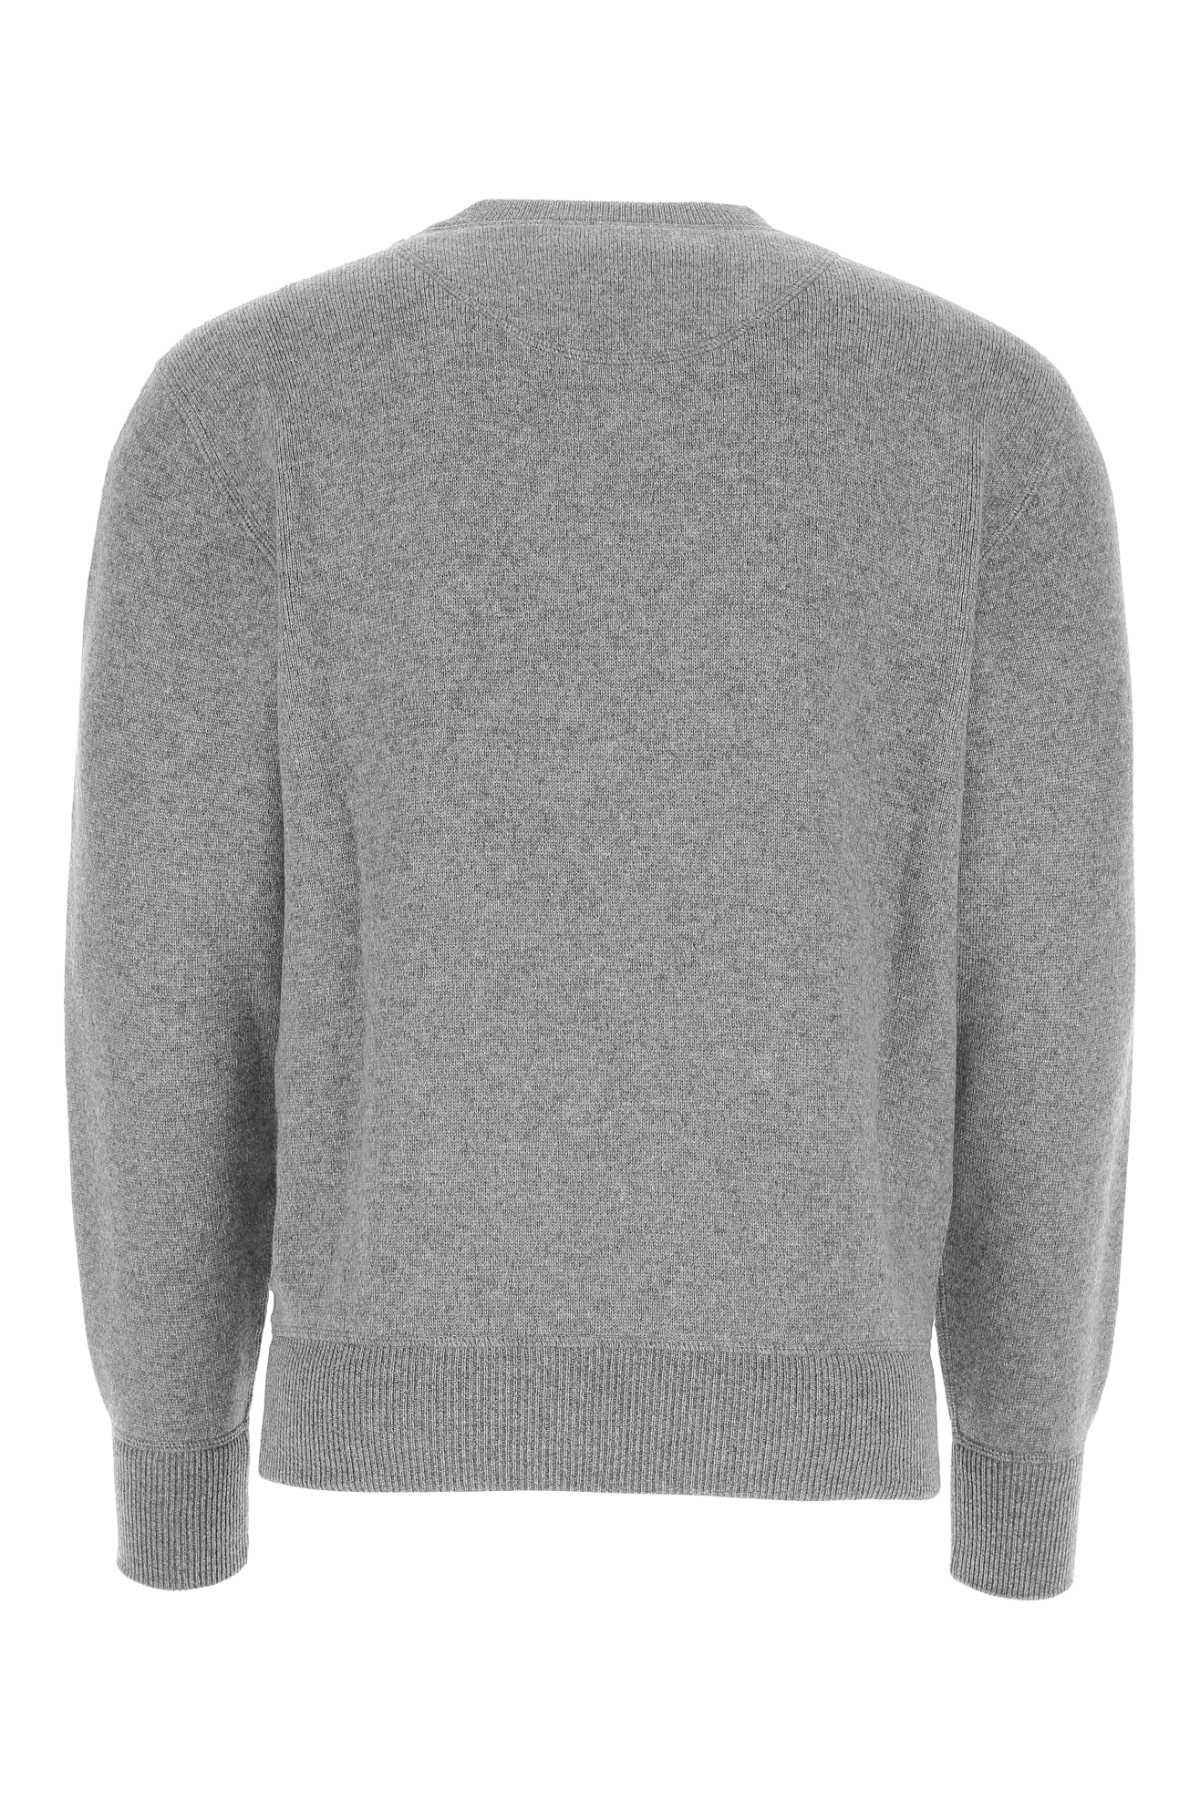 Prada Melange Grey Stretch Cashmere Blend Sweater In Grigio